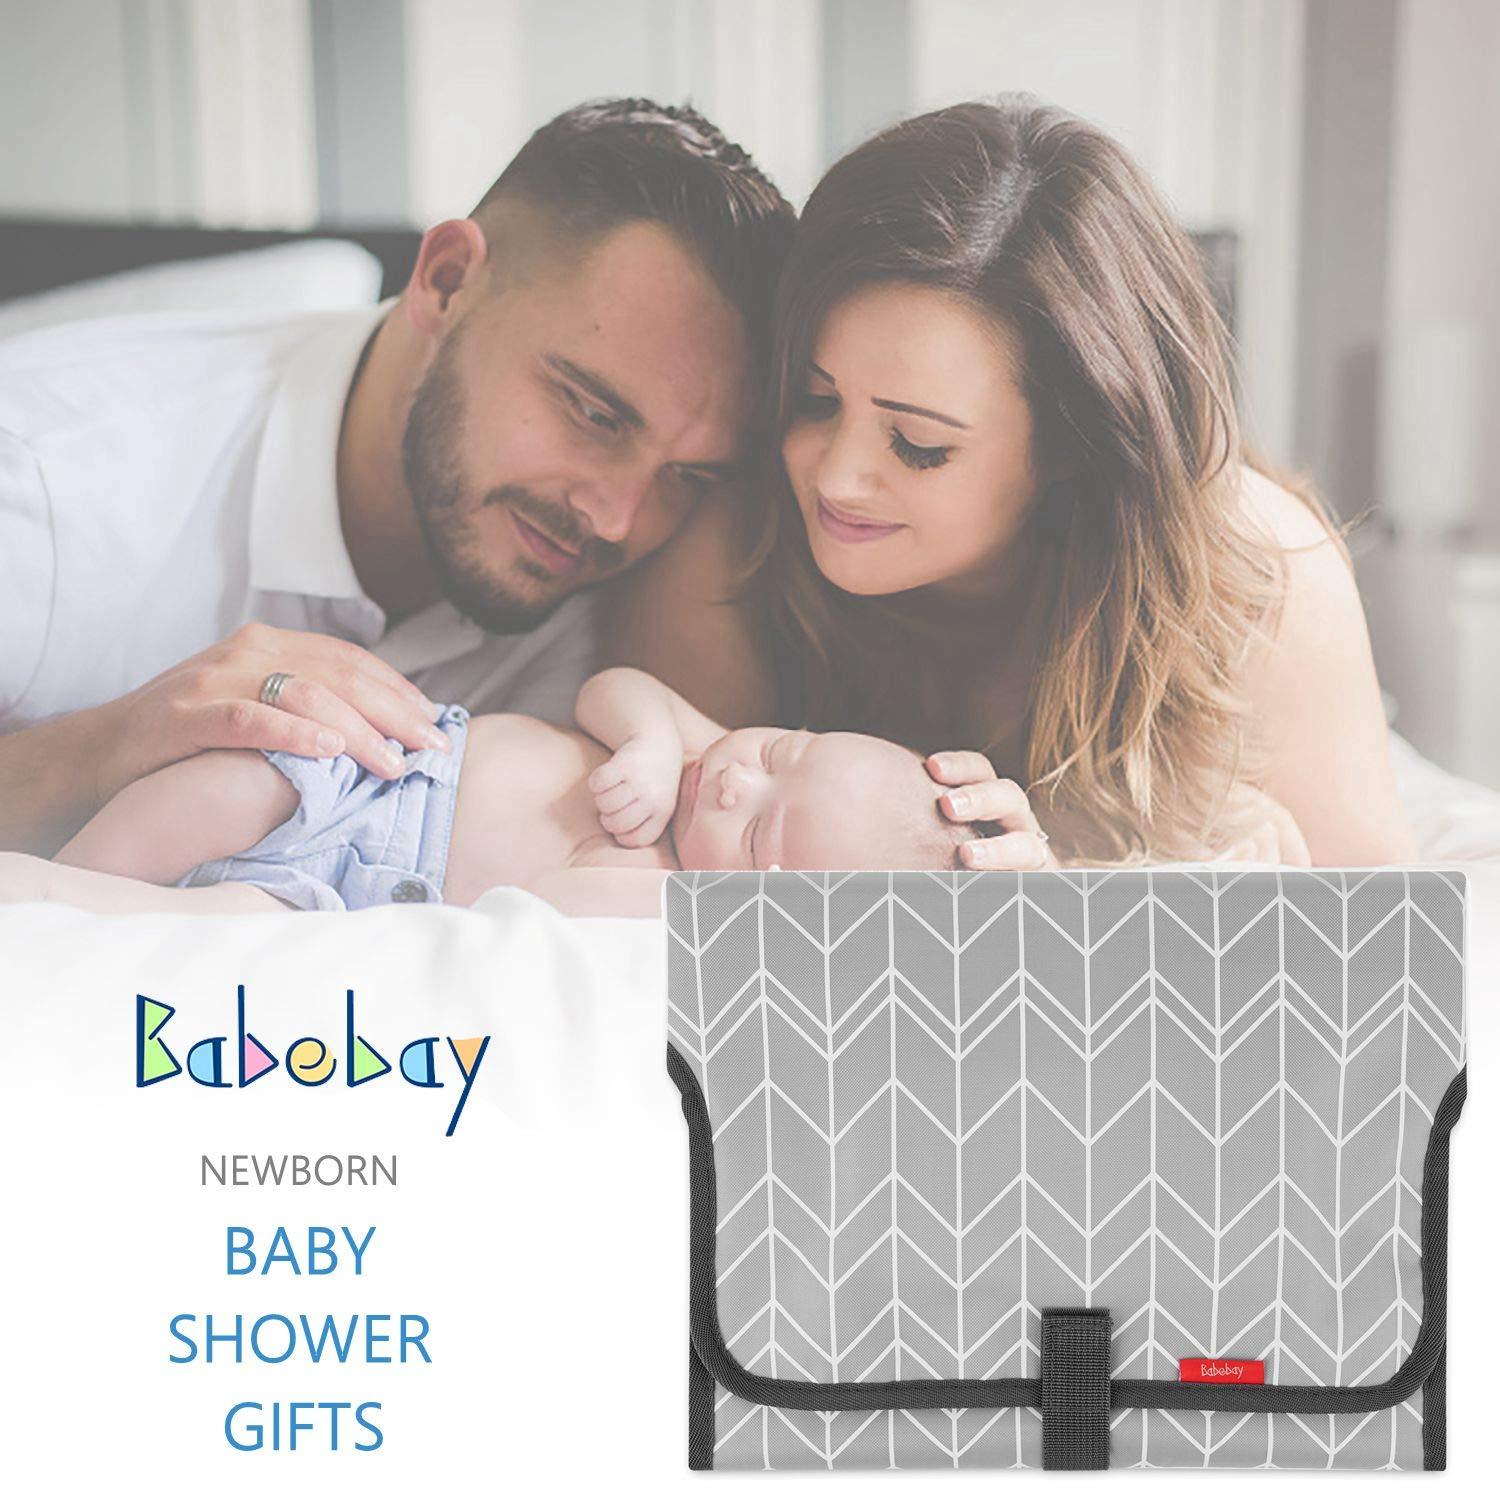 Babebay Portable Baby Changing Pad